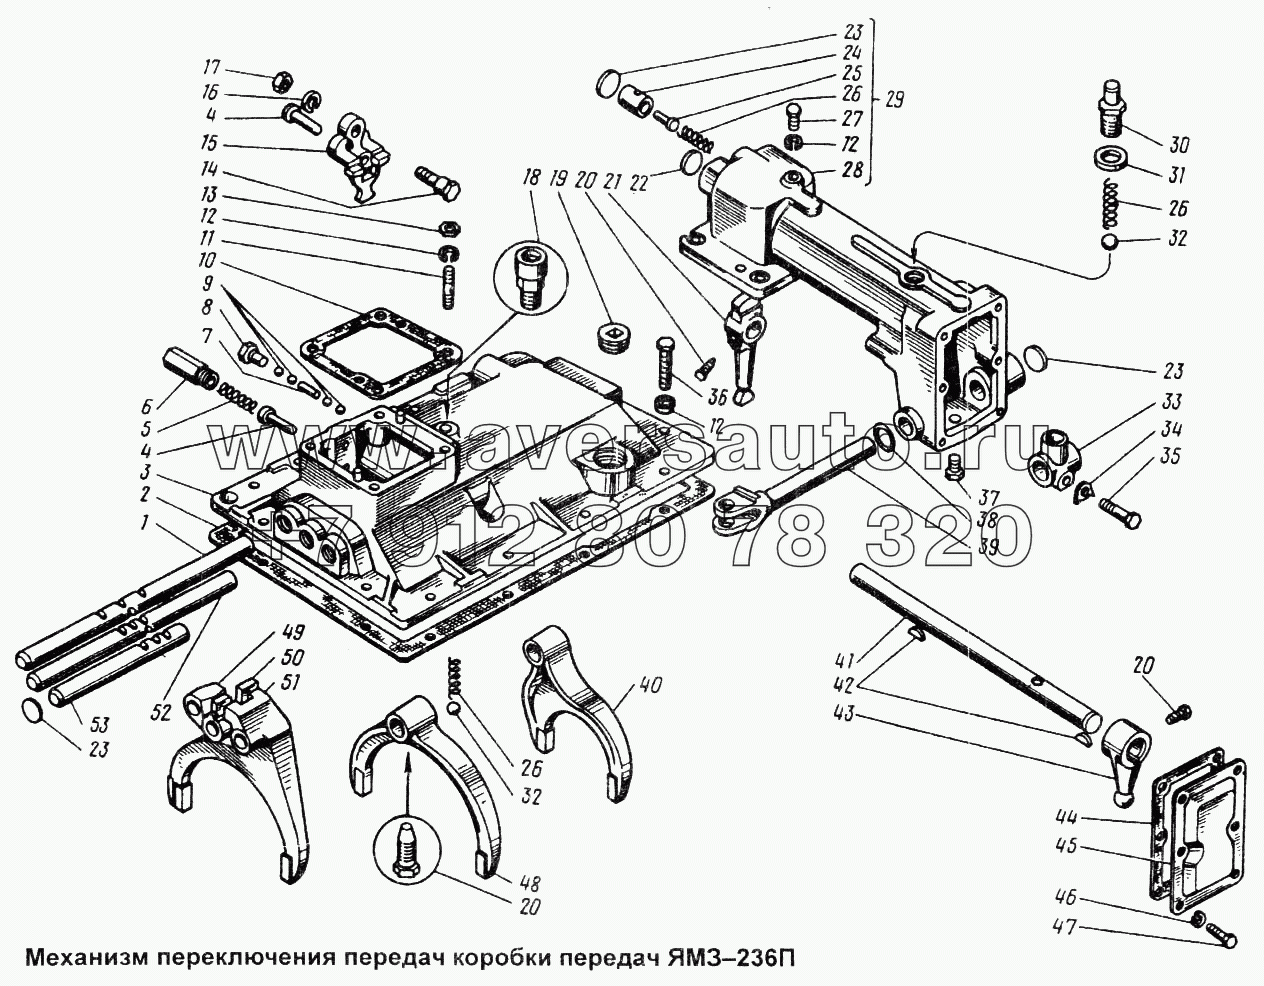 Механизм переключения передач коробки передач ЯМЗ-236П